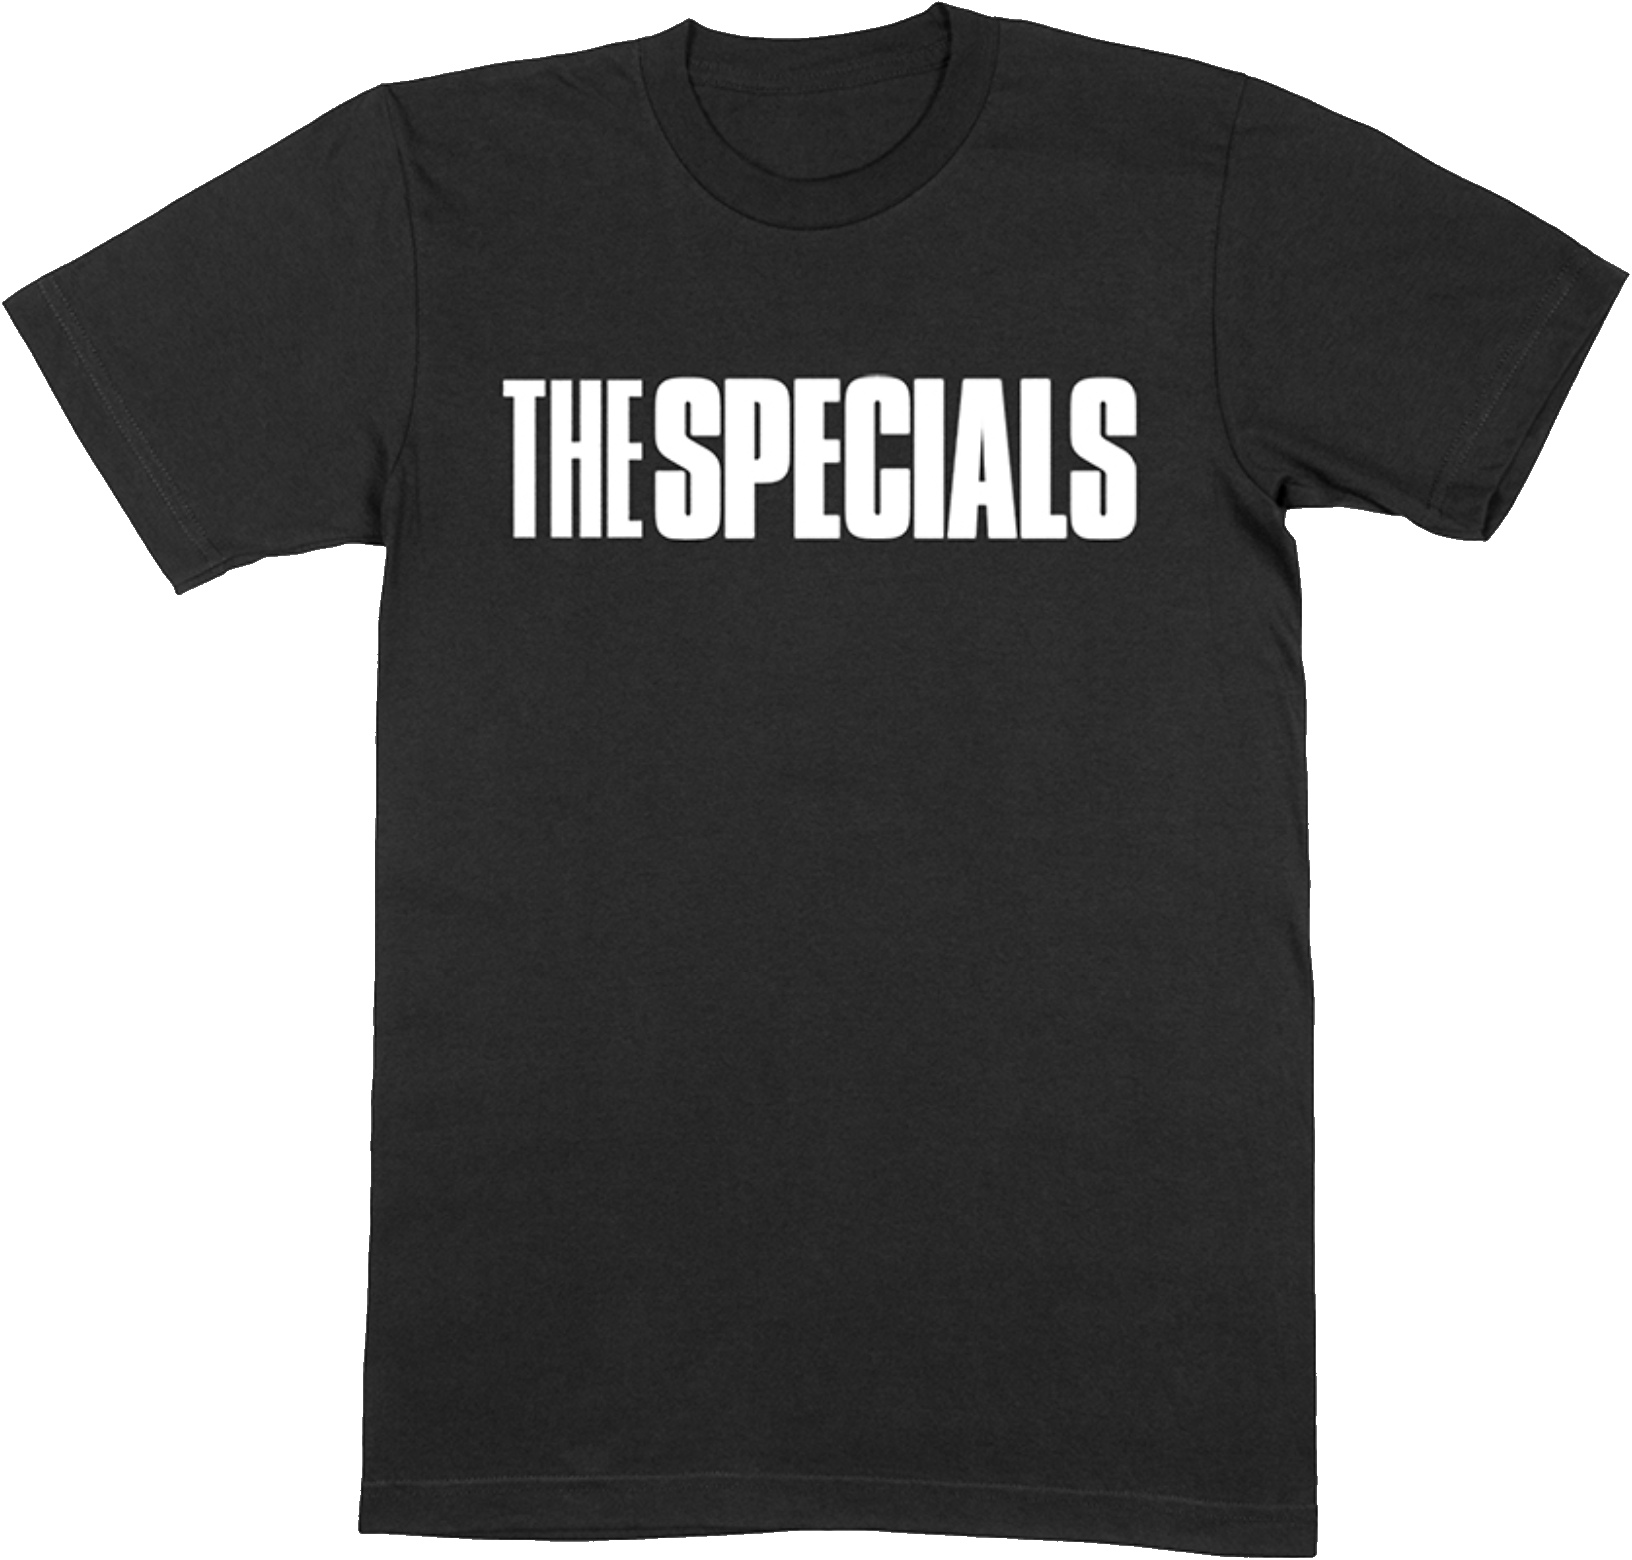 THE SPECIALS - LOGO - BLACK TEE